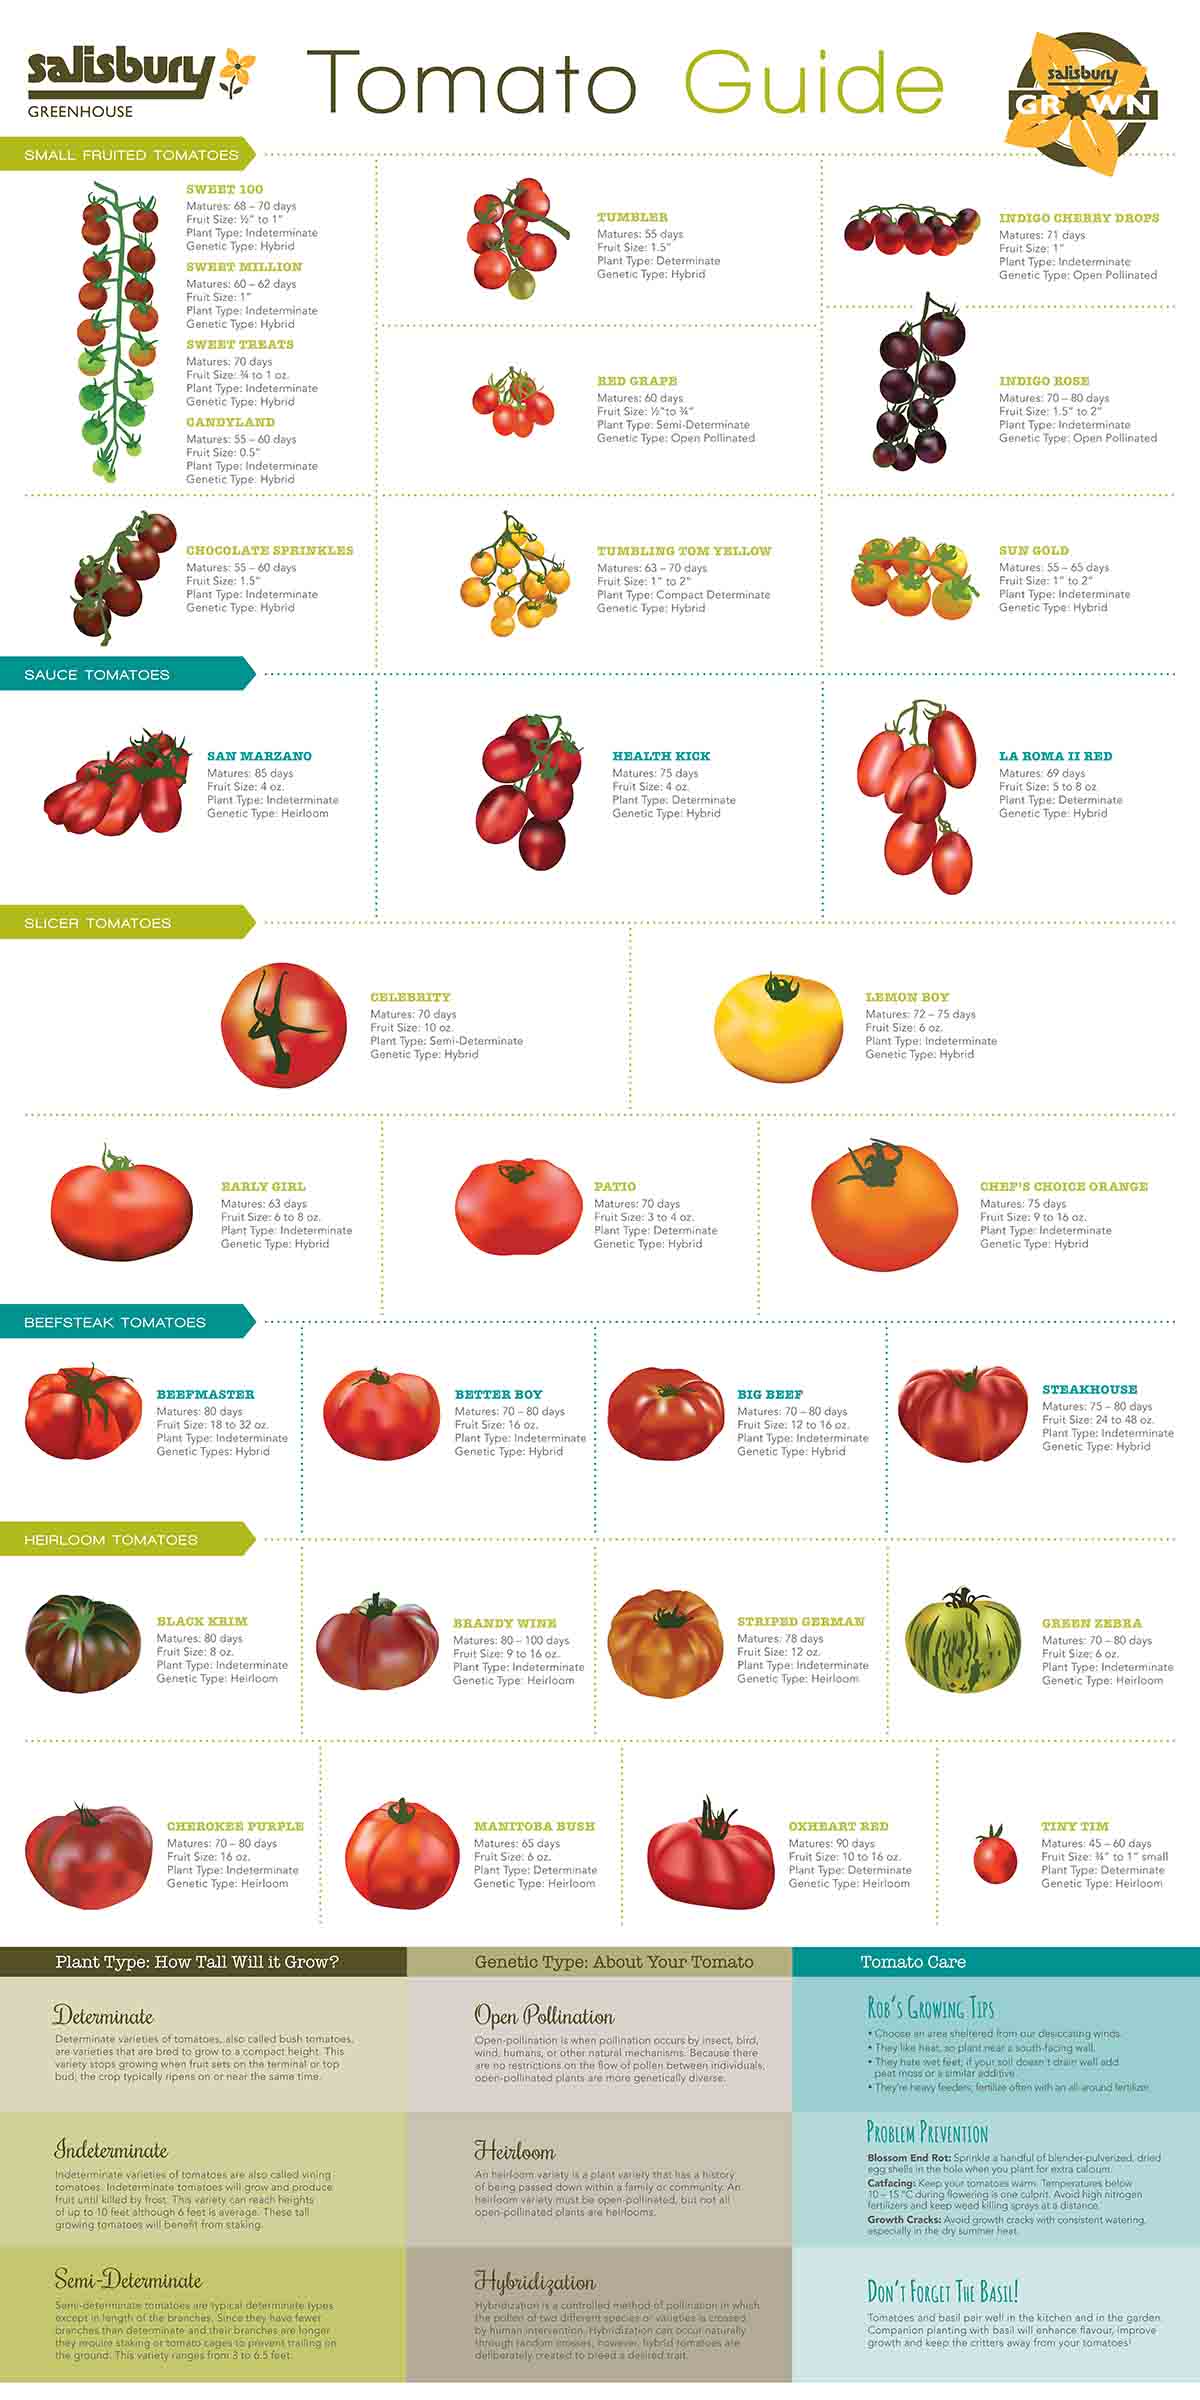 tomato-guide-salisbury-greenhouse